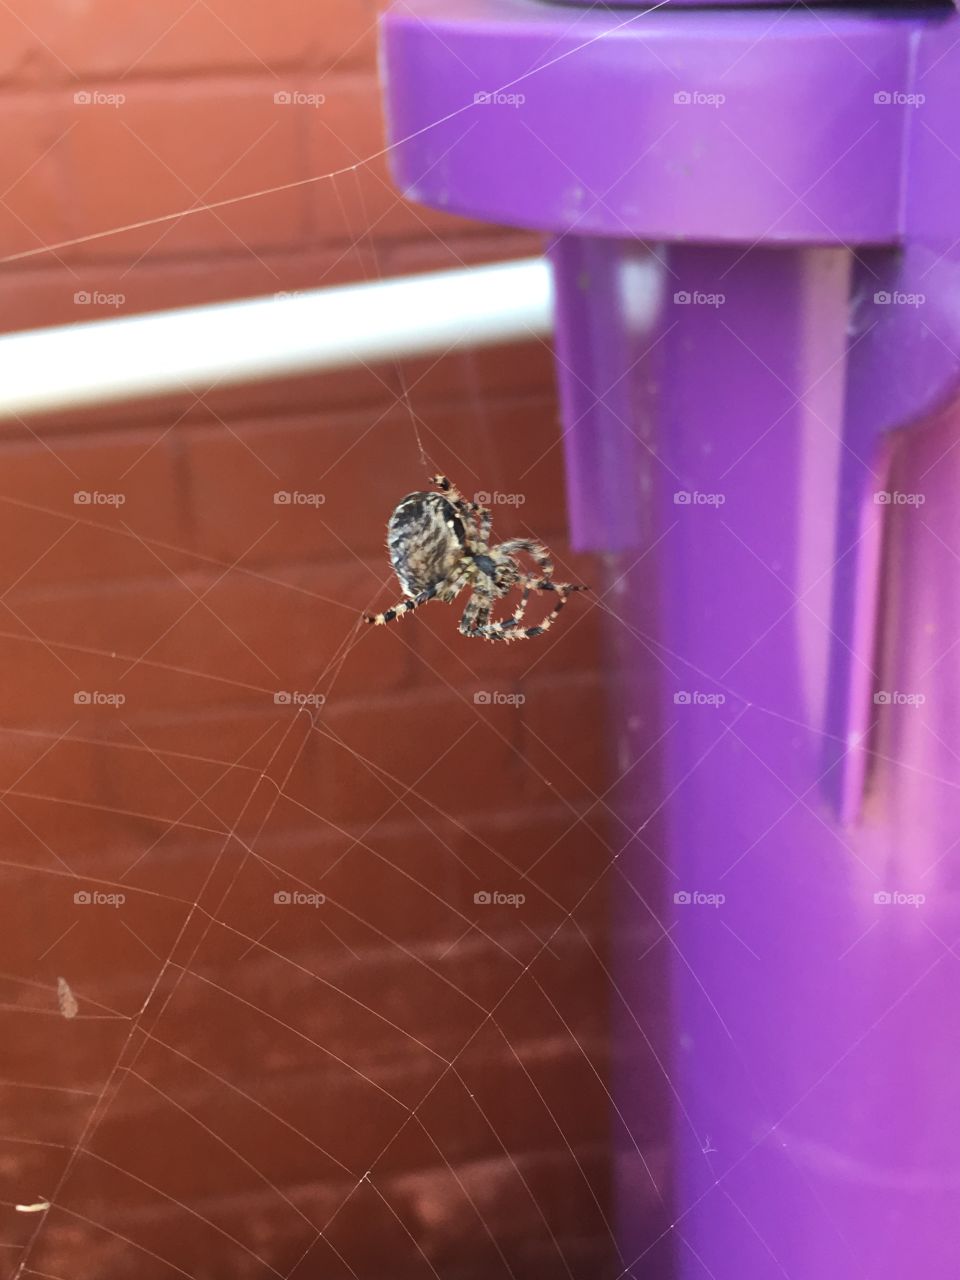 Spider in purple bin 